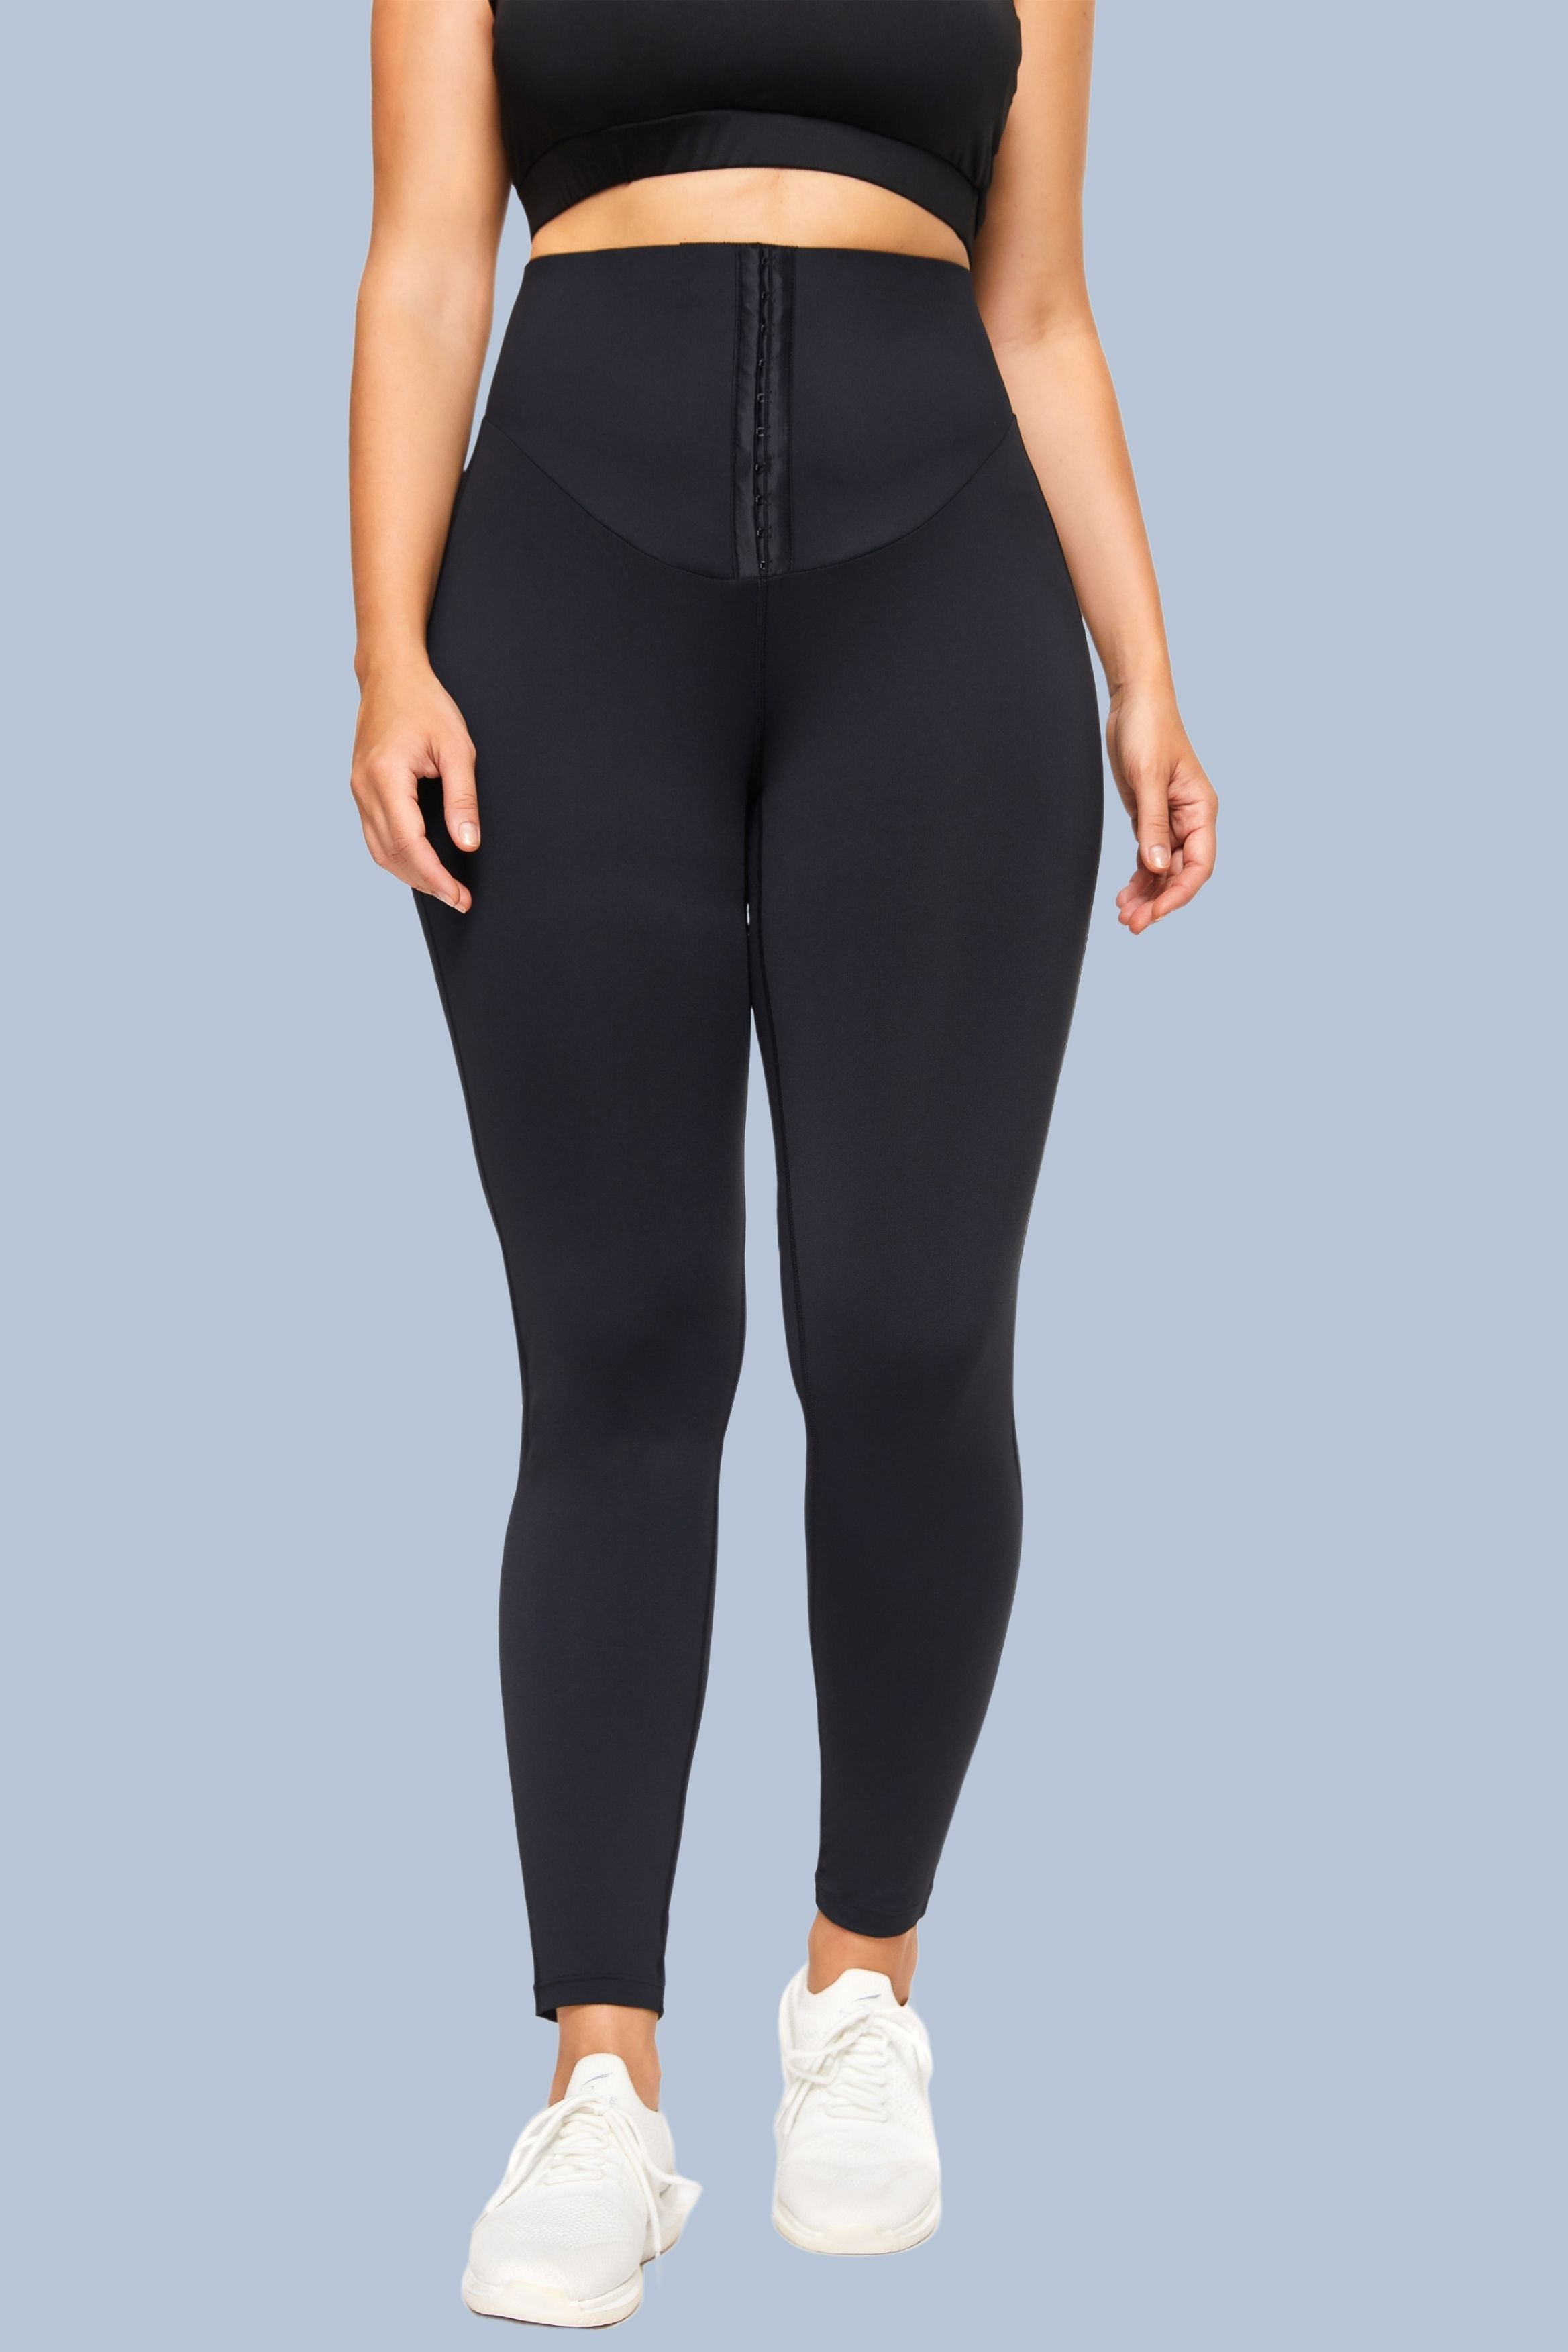  Women Plus Size Leggings Super Soft Stretchy High Waisted Curvy  One Size 2XL 3XL 4XL Workout Yoga Pants (Black Plaid) : Handmade Products